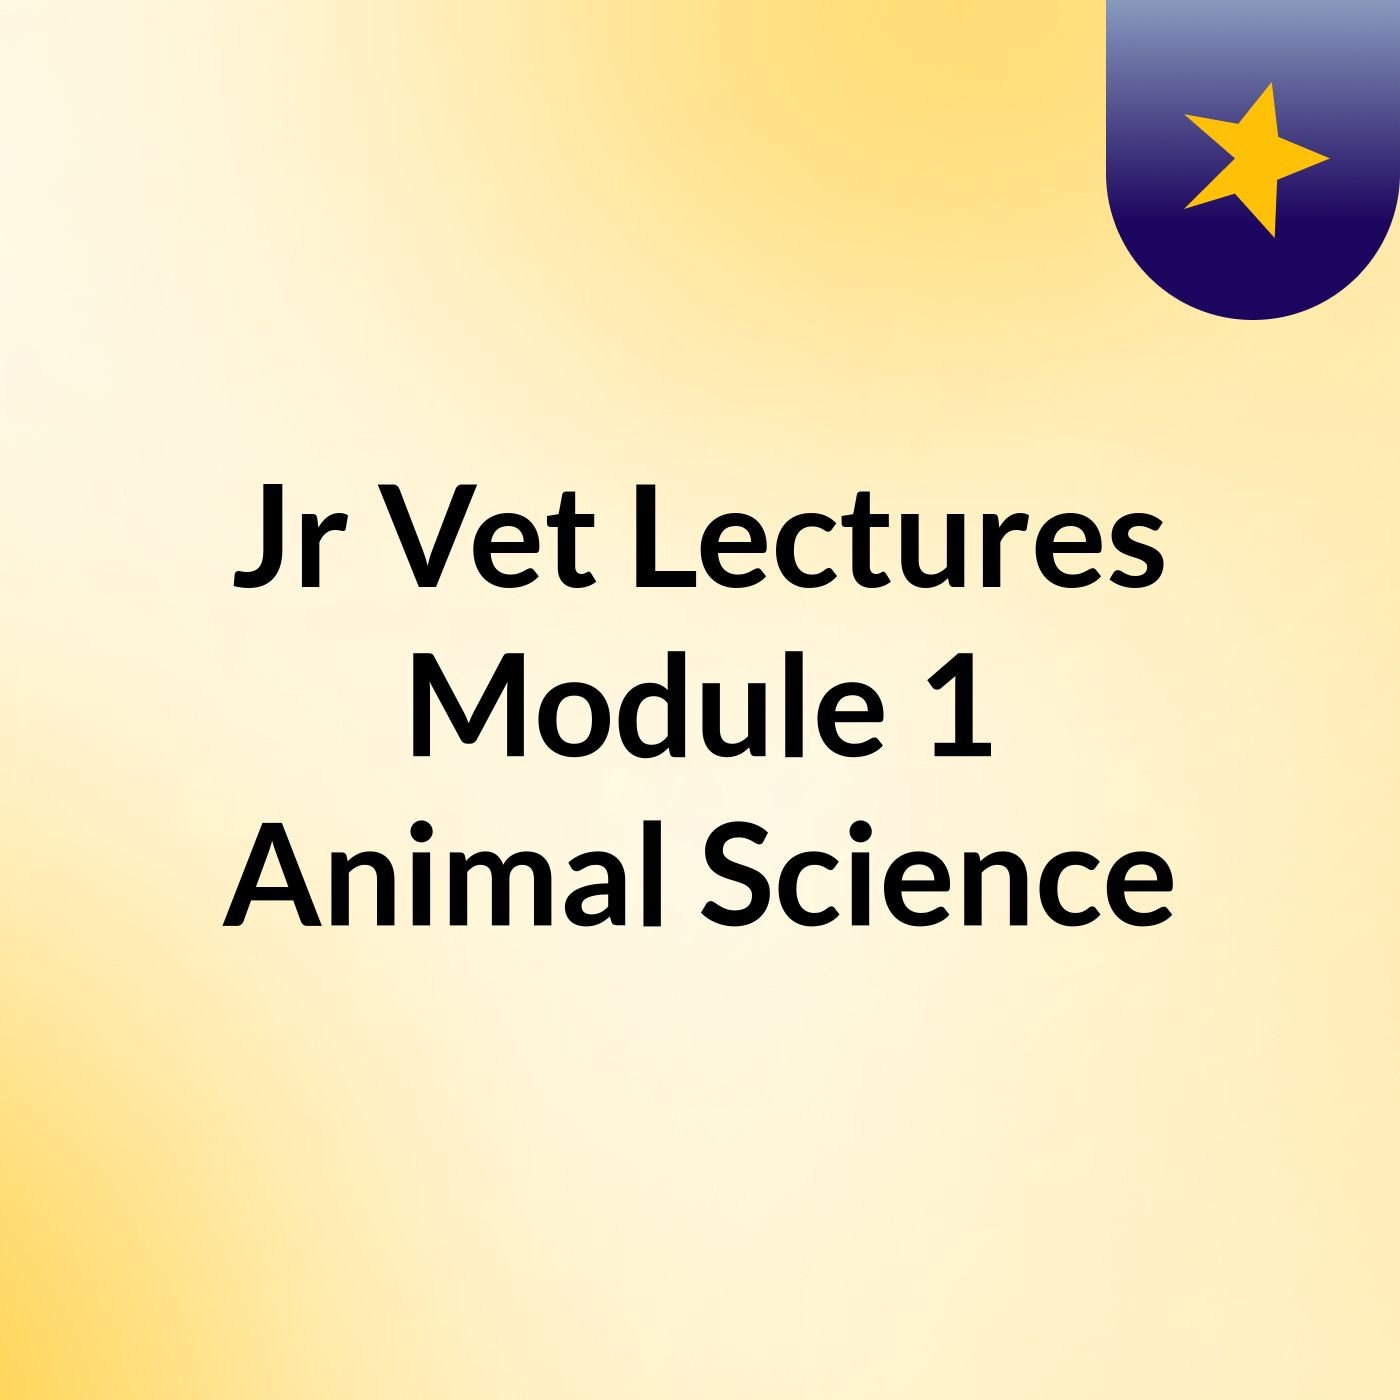 Jr Vet Lectures Module 1 Animal Science